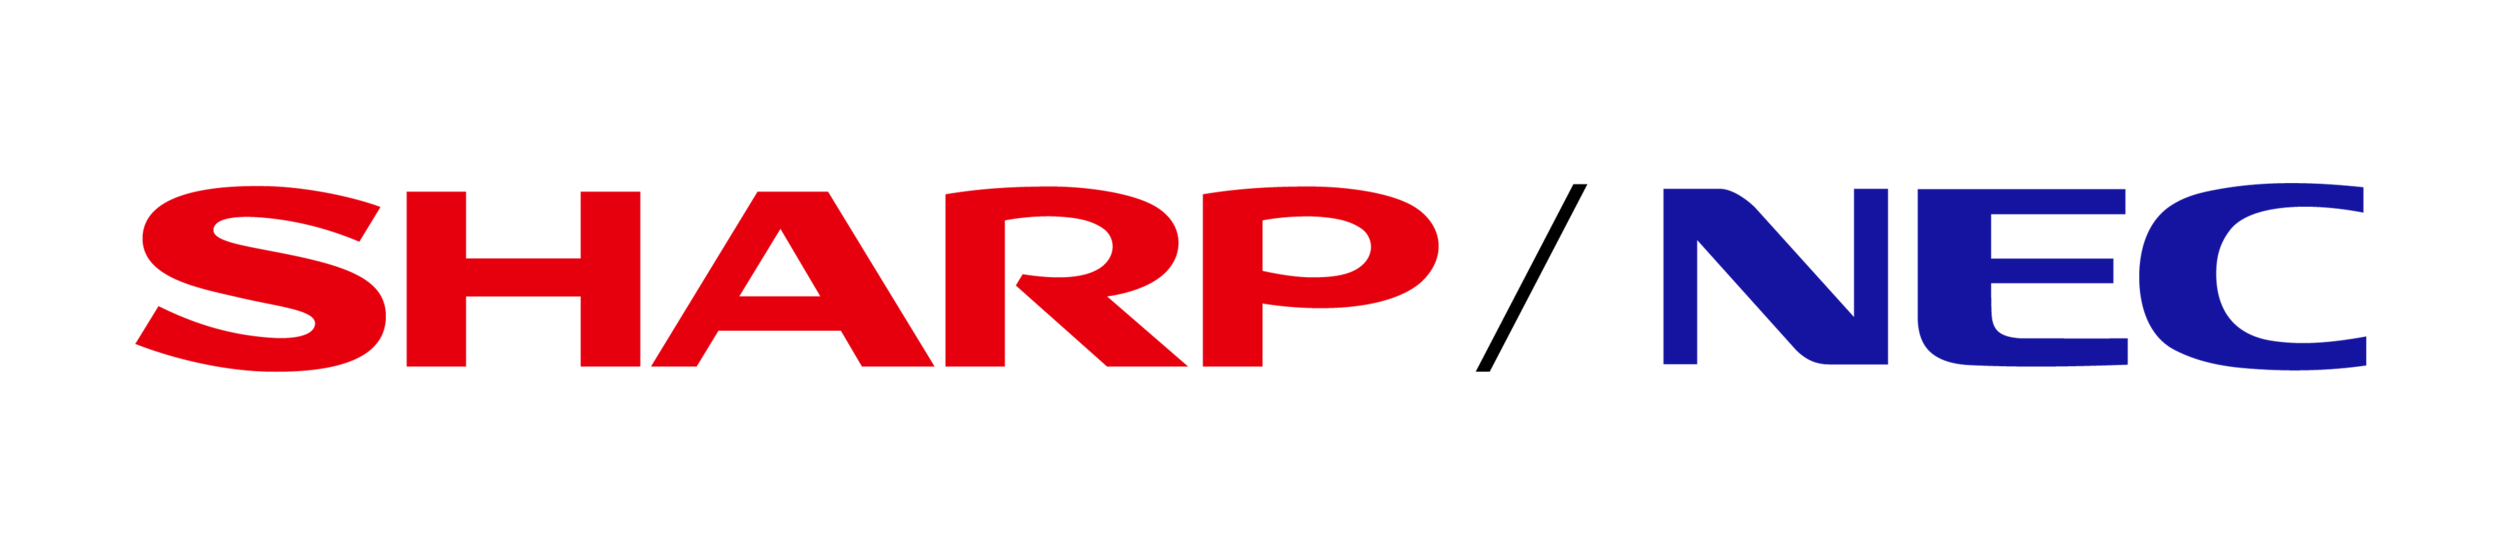 sharp-nec-displays-logo.png